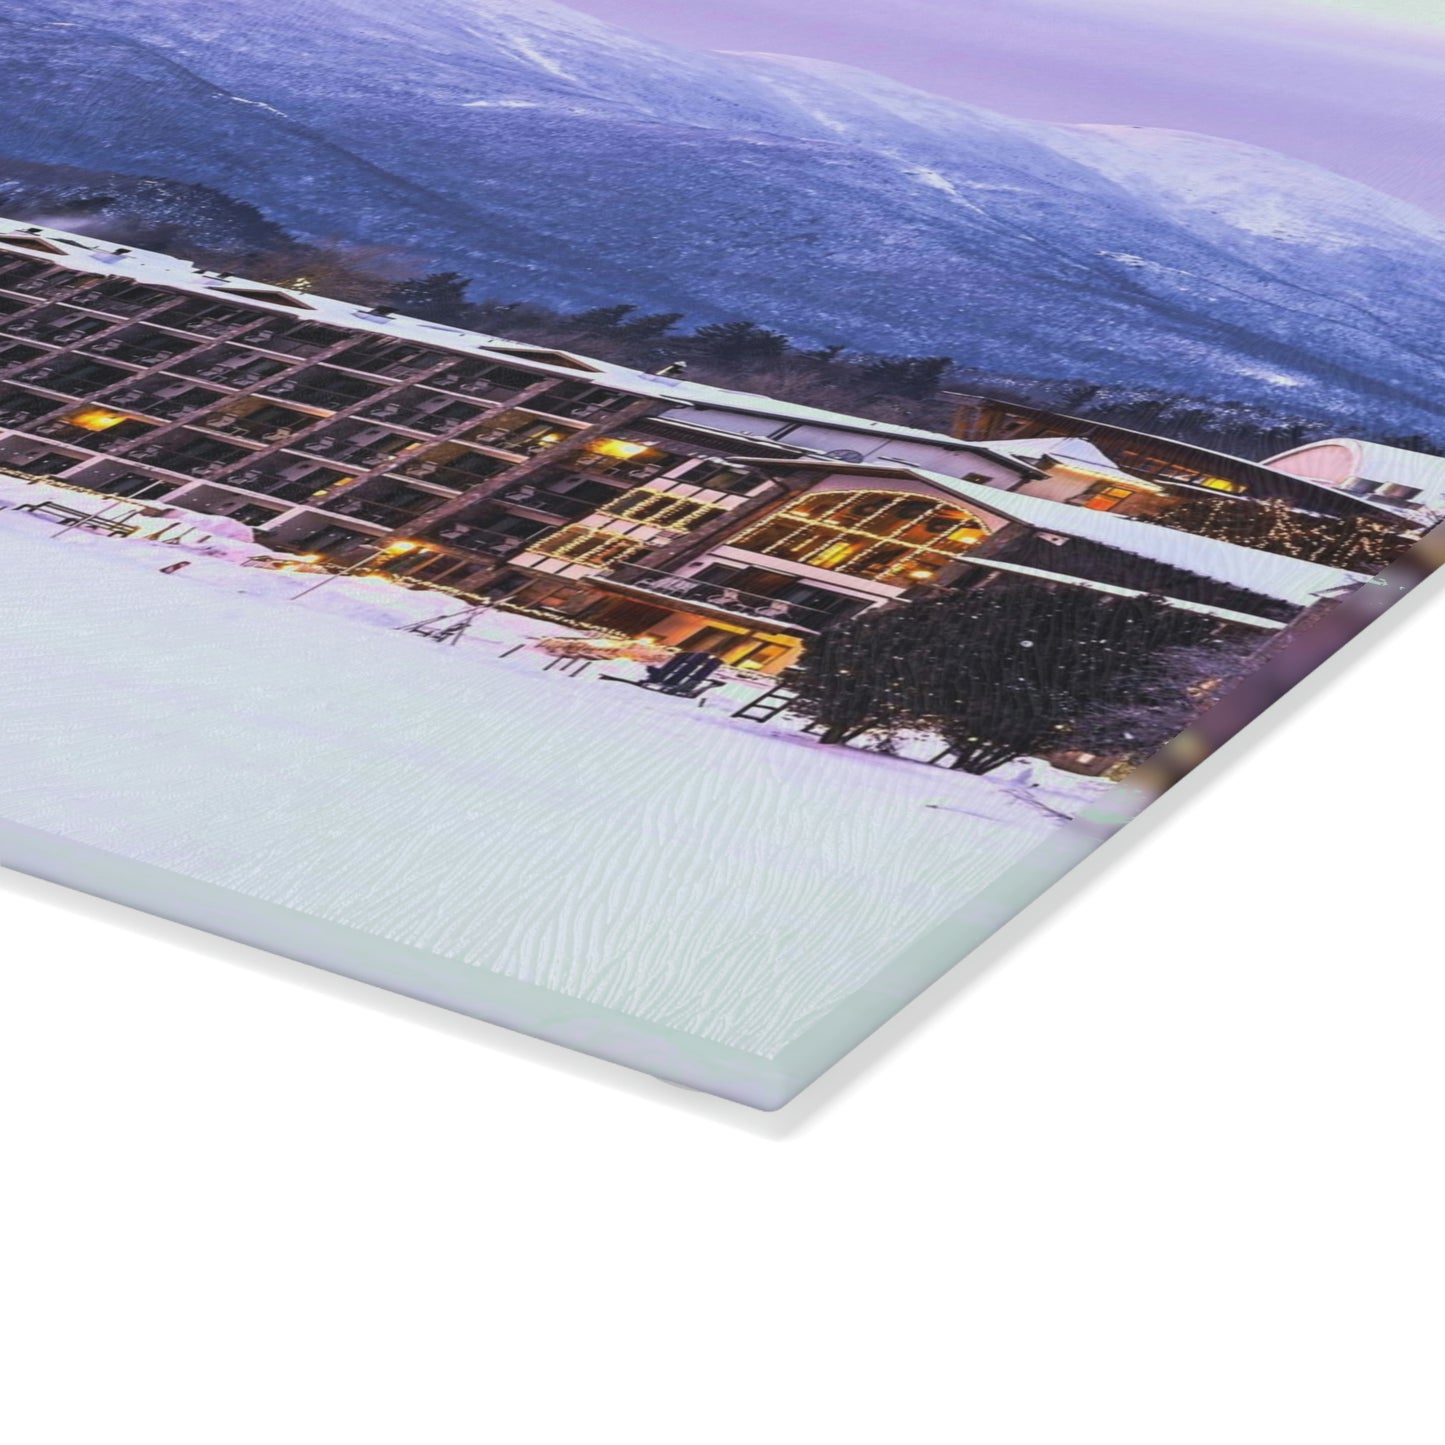 Glass Cutting Board - Frozen in Time, Mirror Lake